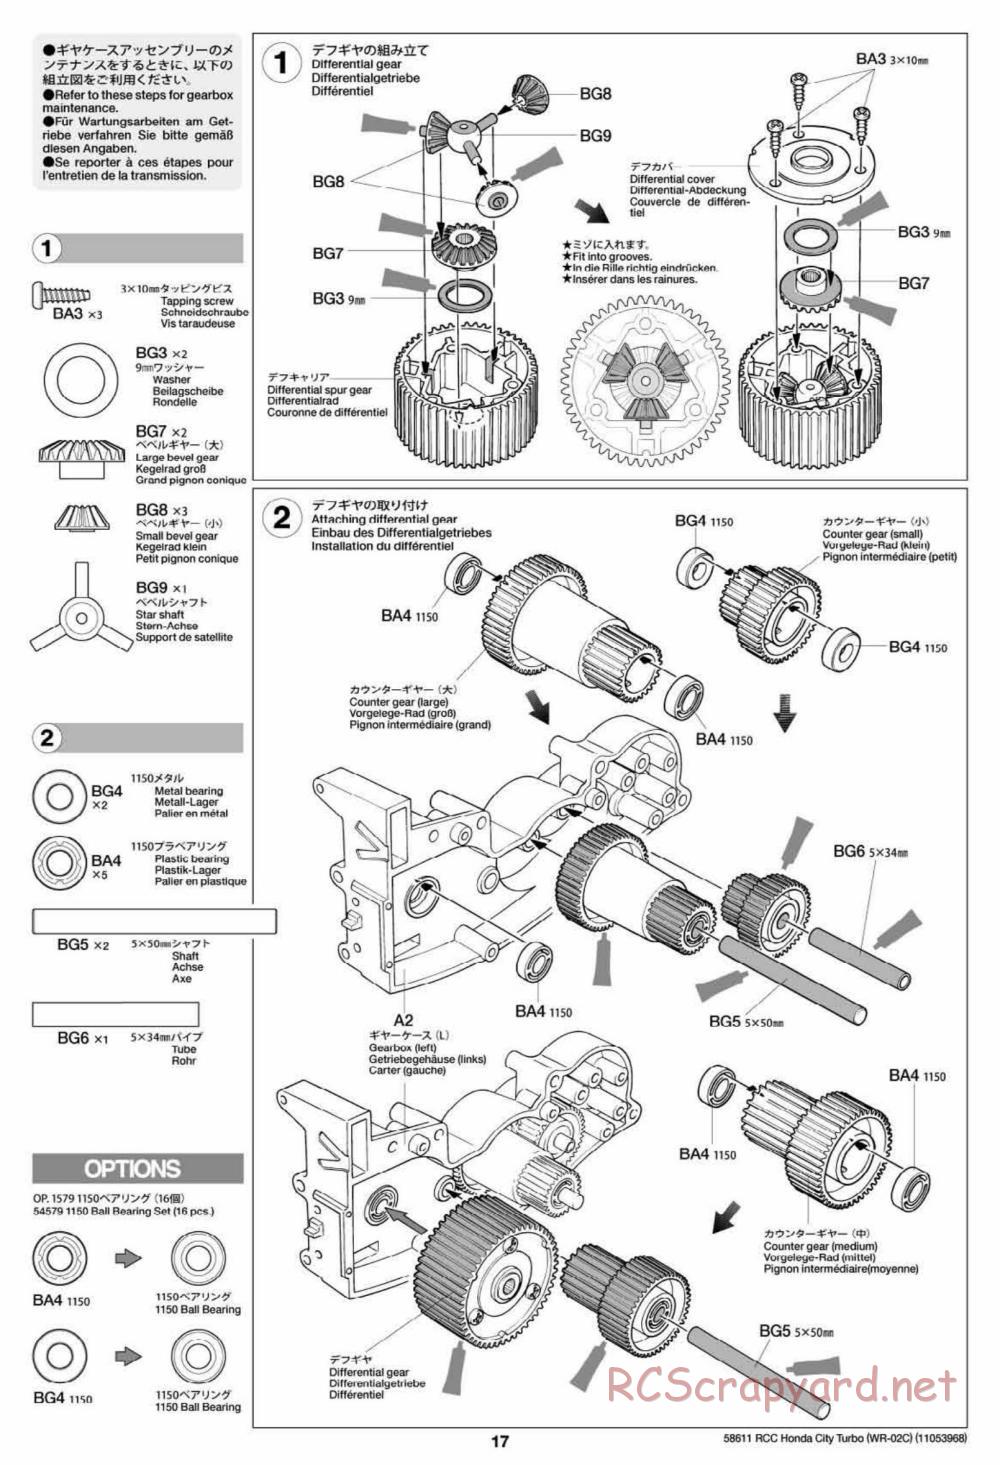 Tamiya - WR-02C Chassis - Manual - Page 17